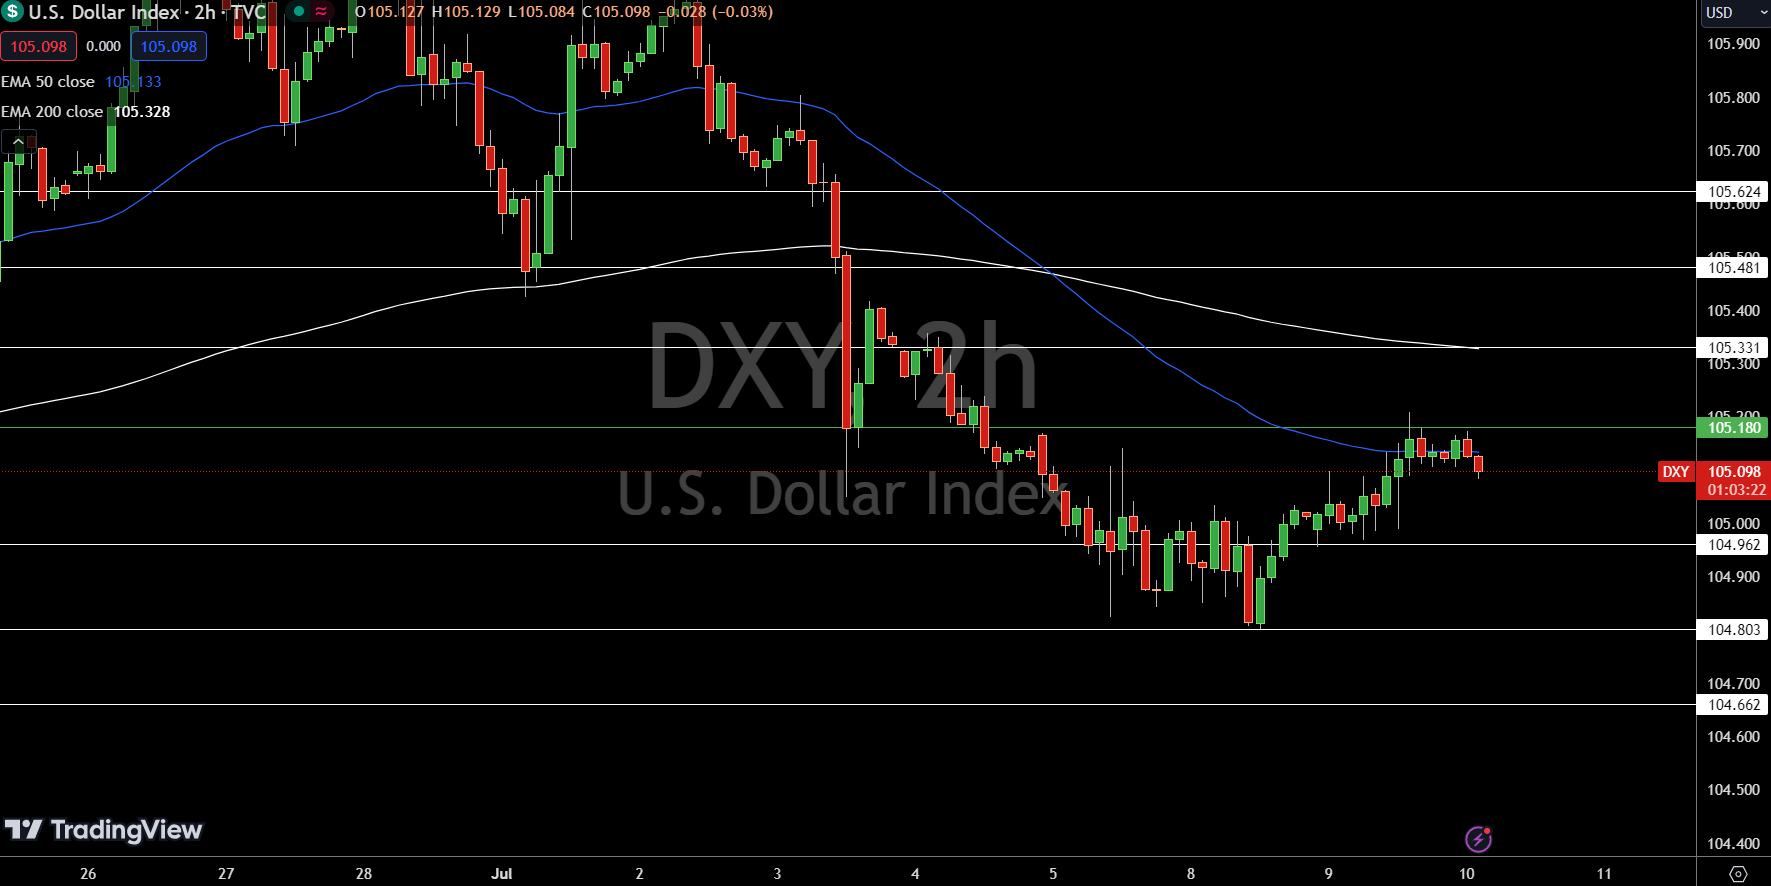 Dollar Index Price Chart - Source: Tradingview